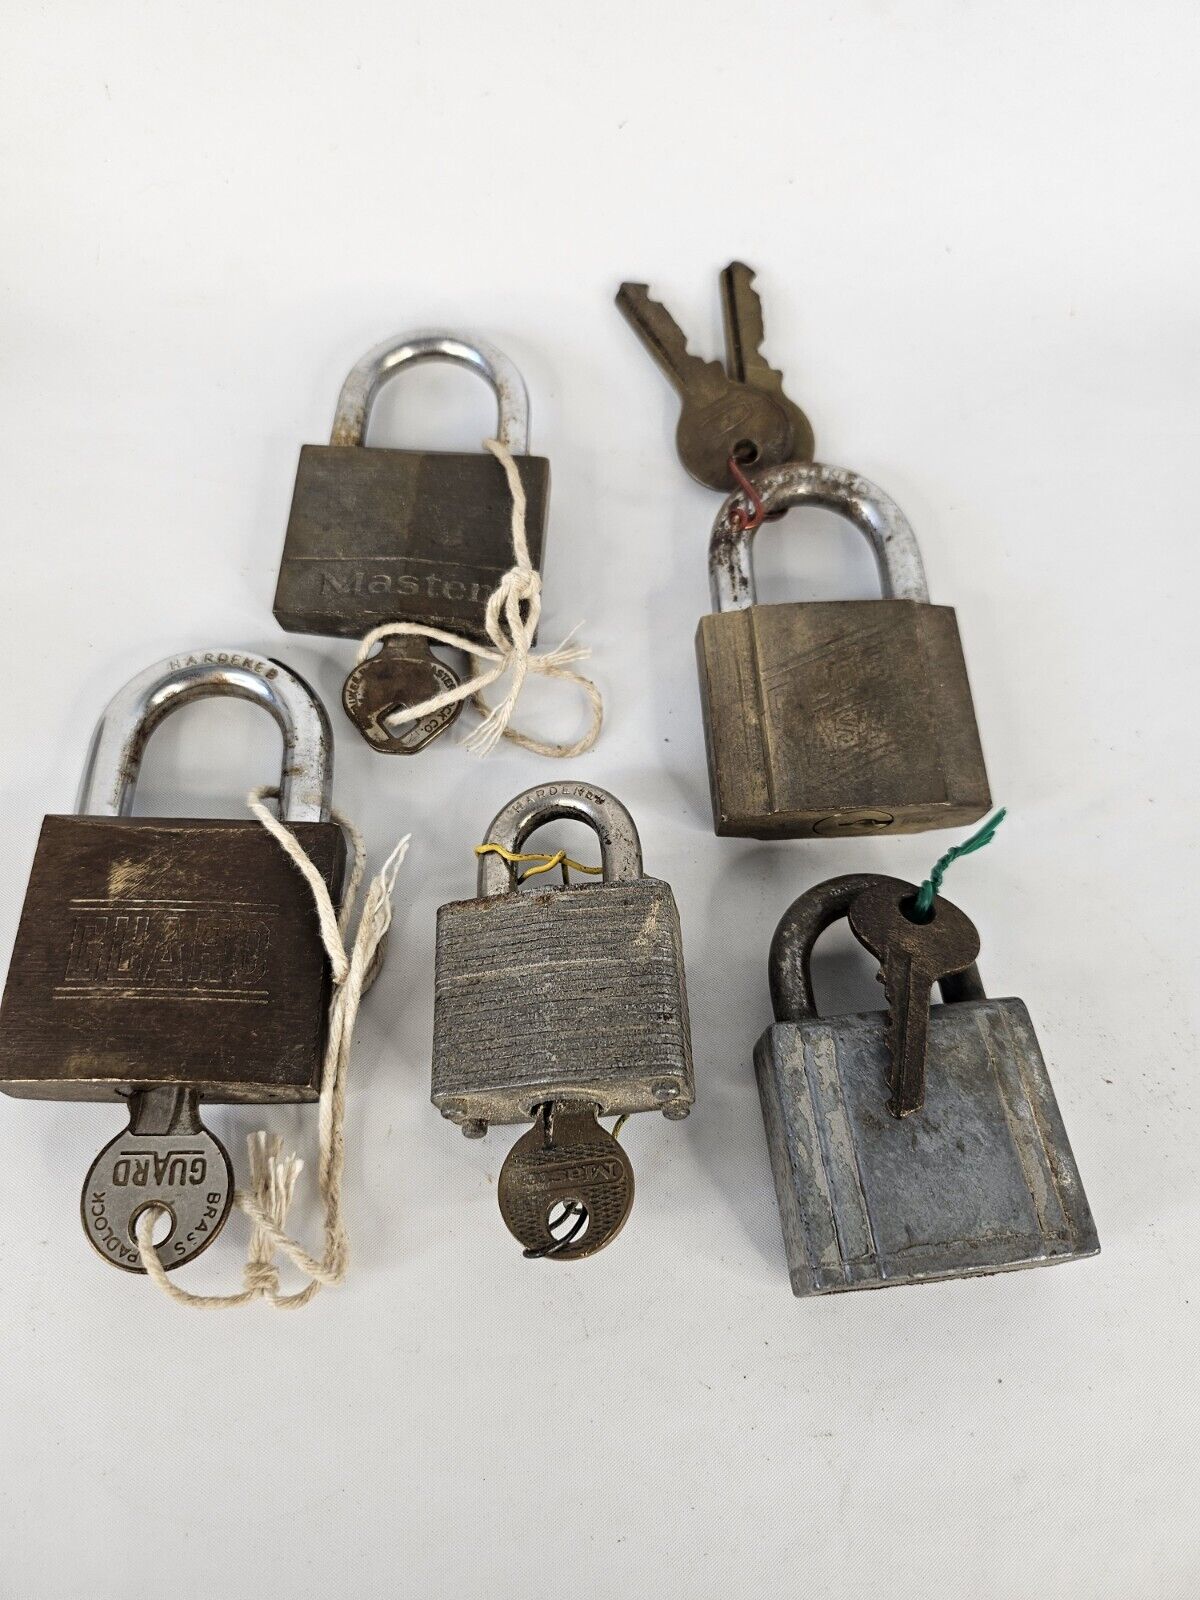 5 Vintage Padlocks with Keys GUARD, MASTER, CORBIN, GLOBE MASTER